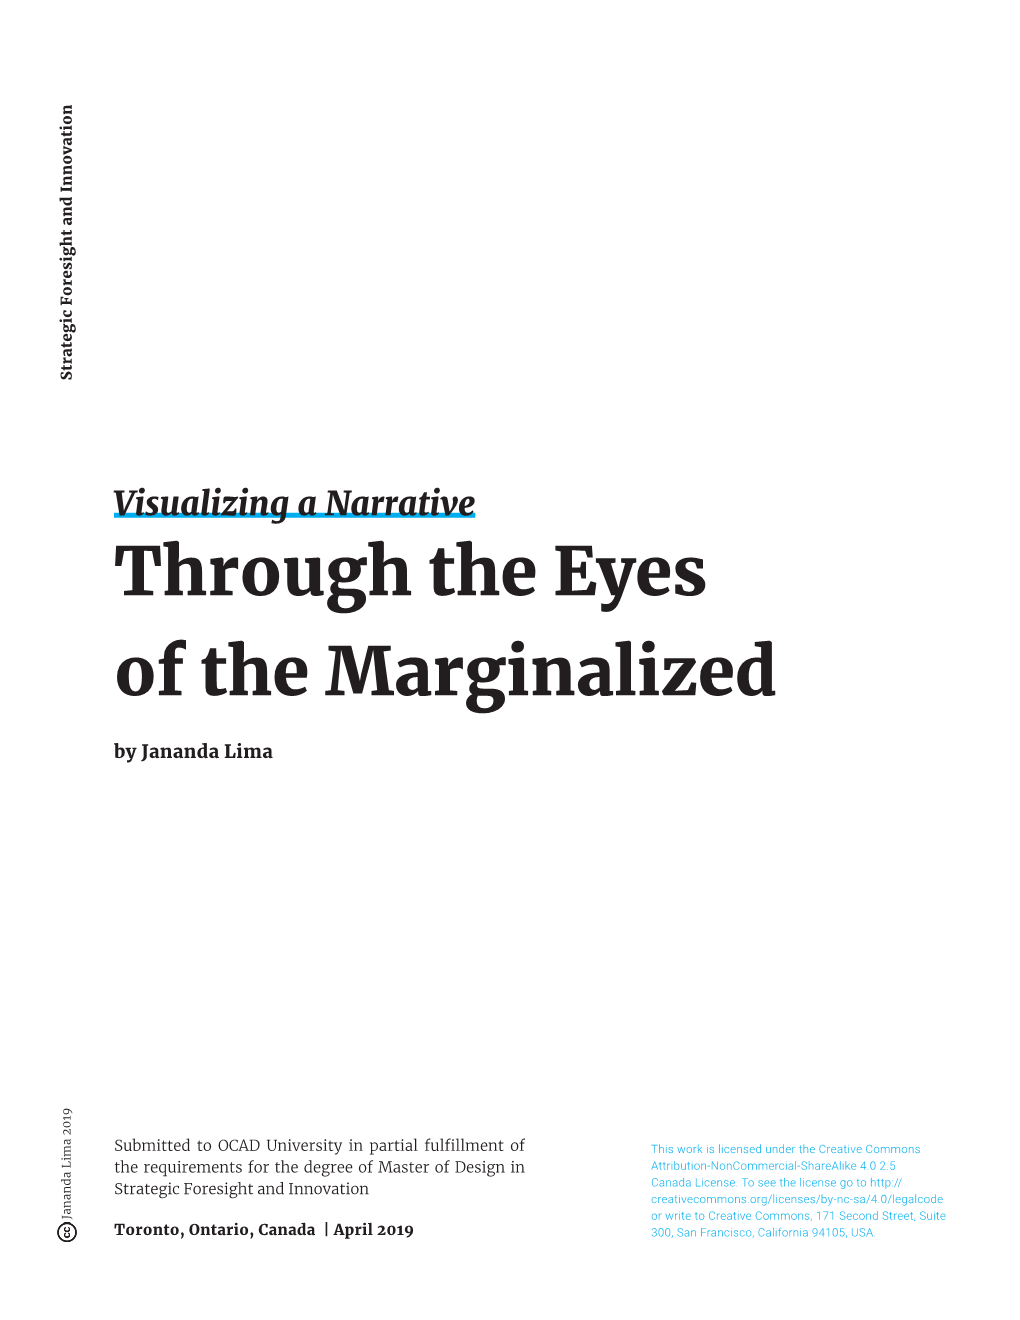 Through the Eyes of the Marginalized